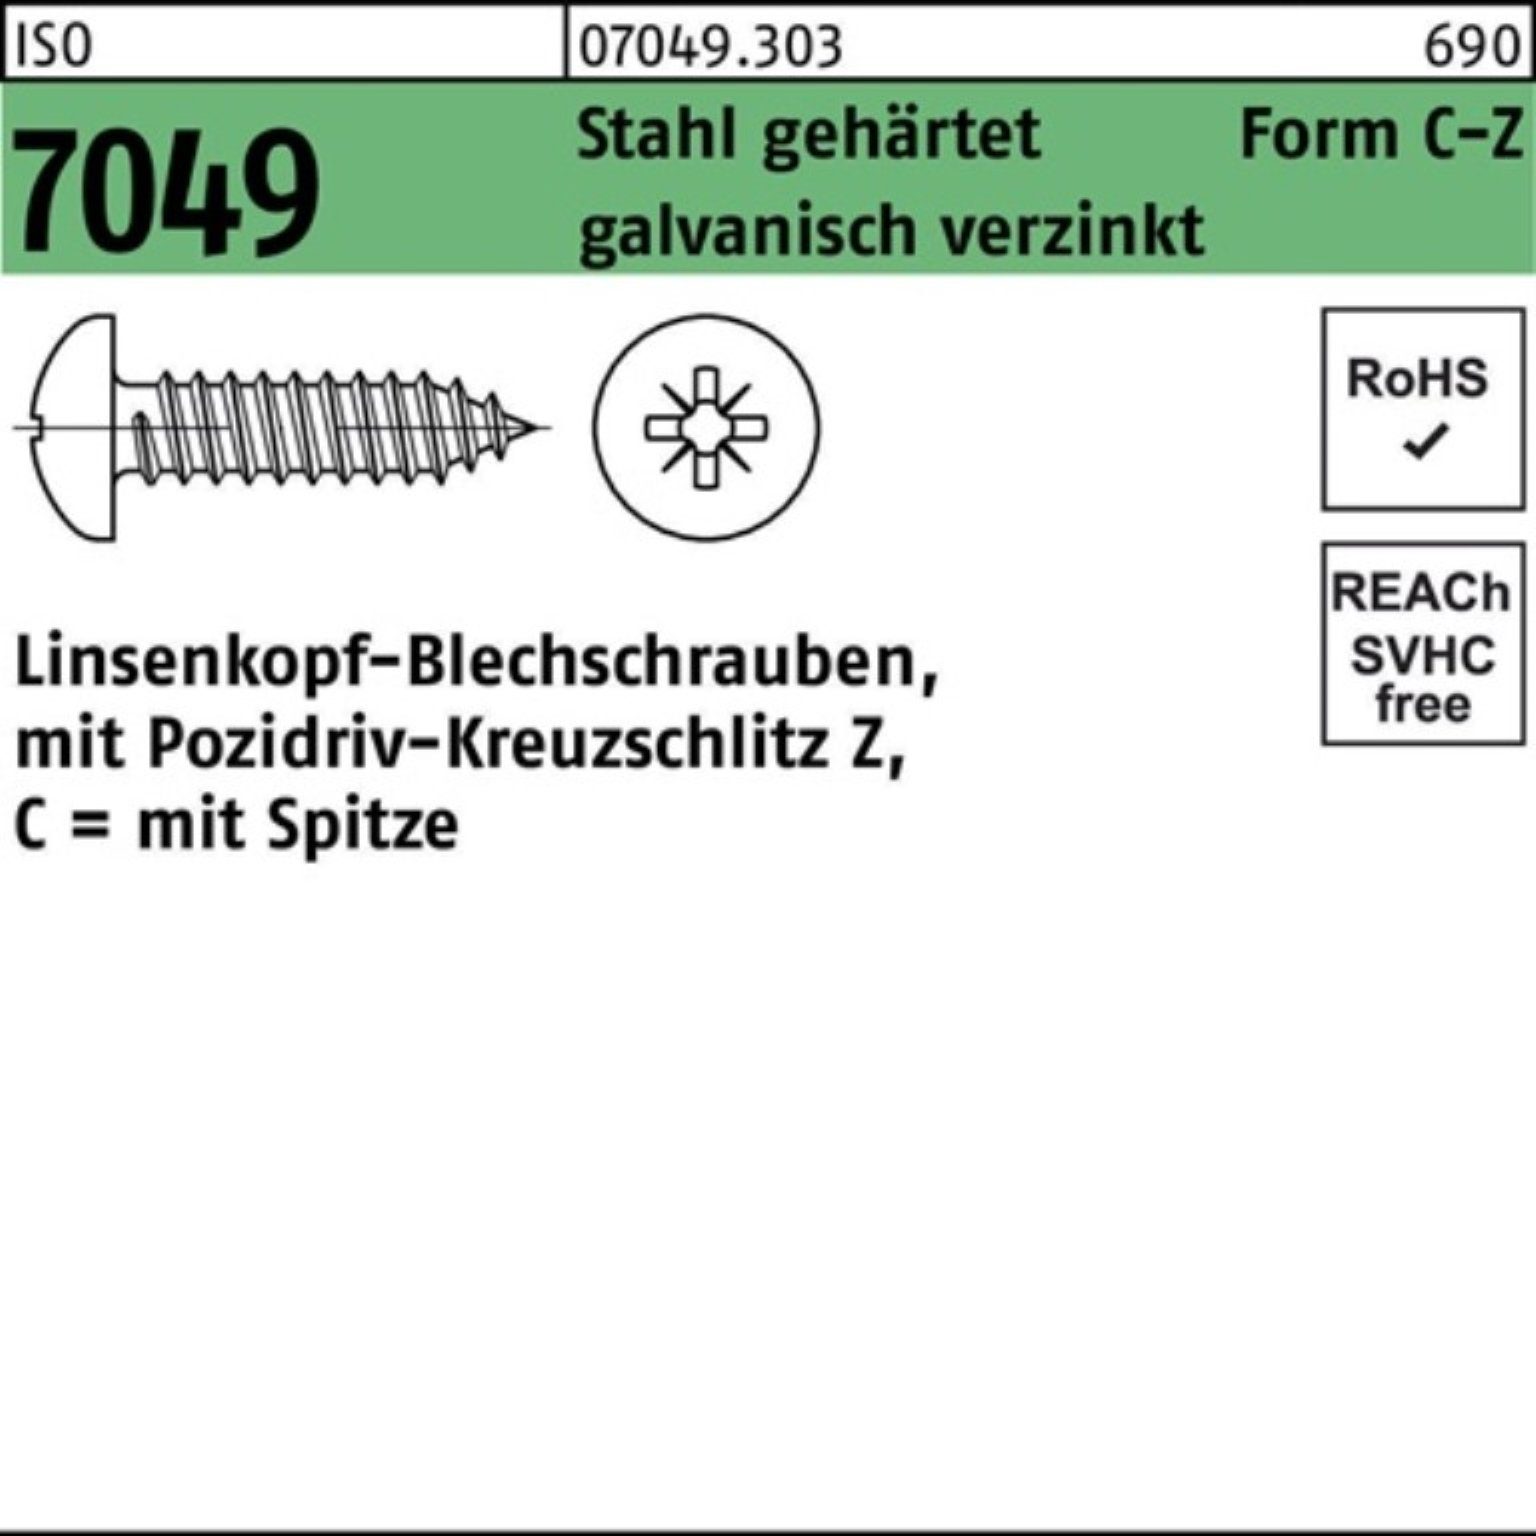 Pack Reyher Blechschraube 3,9x ge LIKO Blechschraube 7049 ISO -C-Z 500er 38 Stahl Spitze/PZ